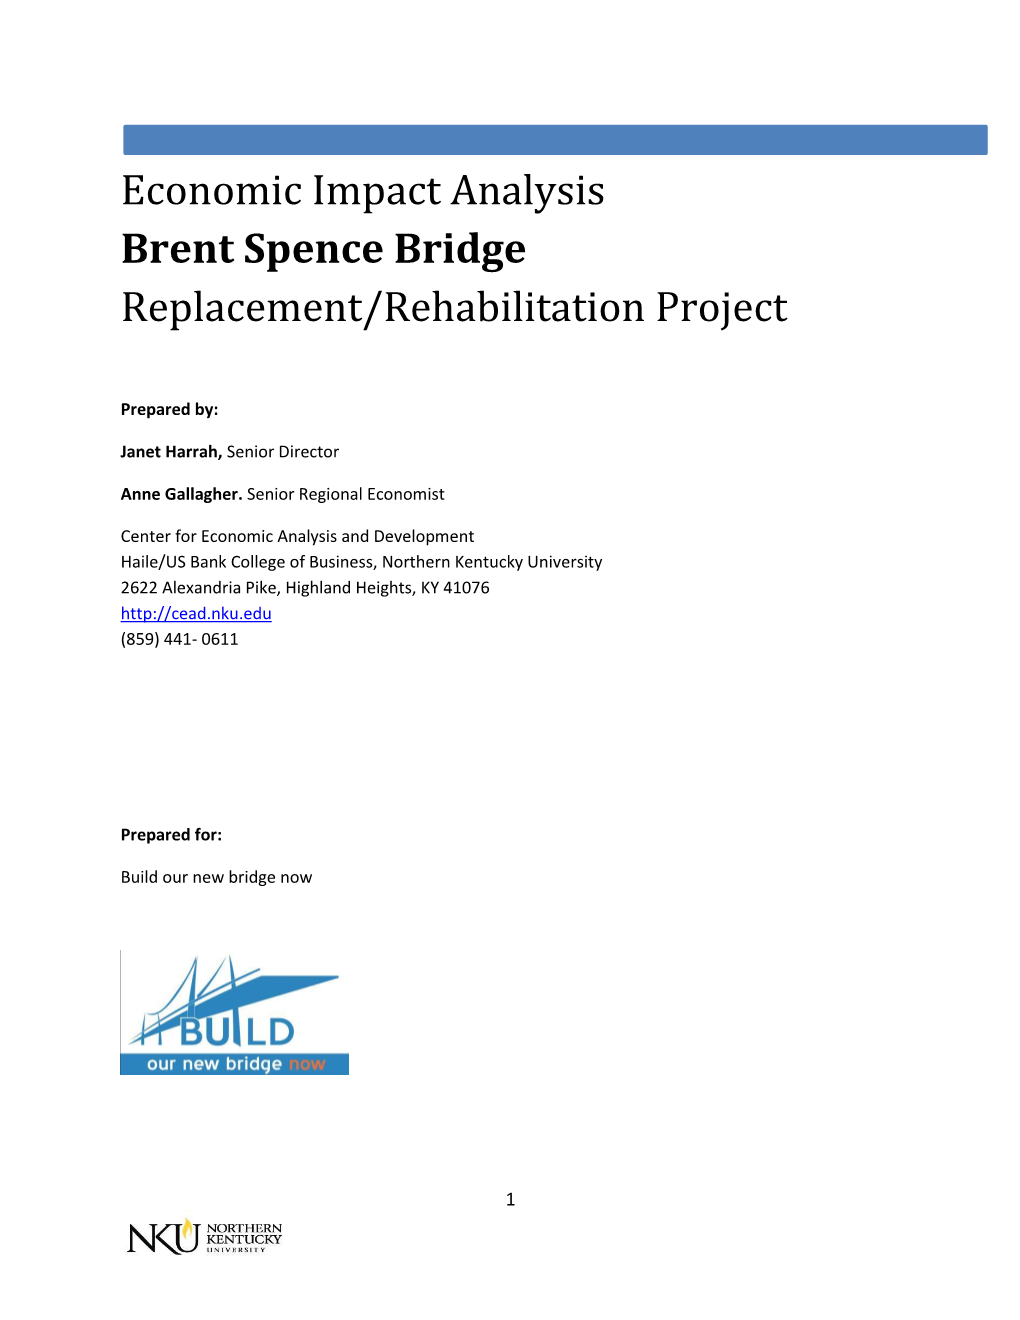 Economic Impact Analysis Brent Spence Bridge Replacement/Rehabilitation Project